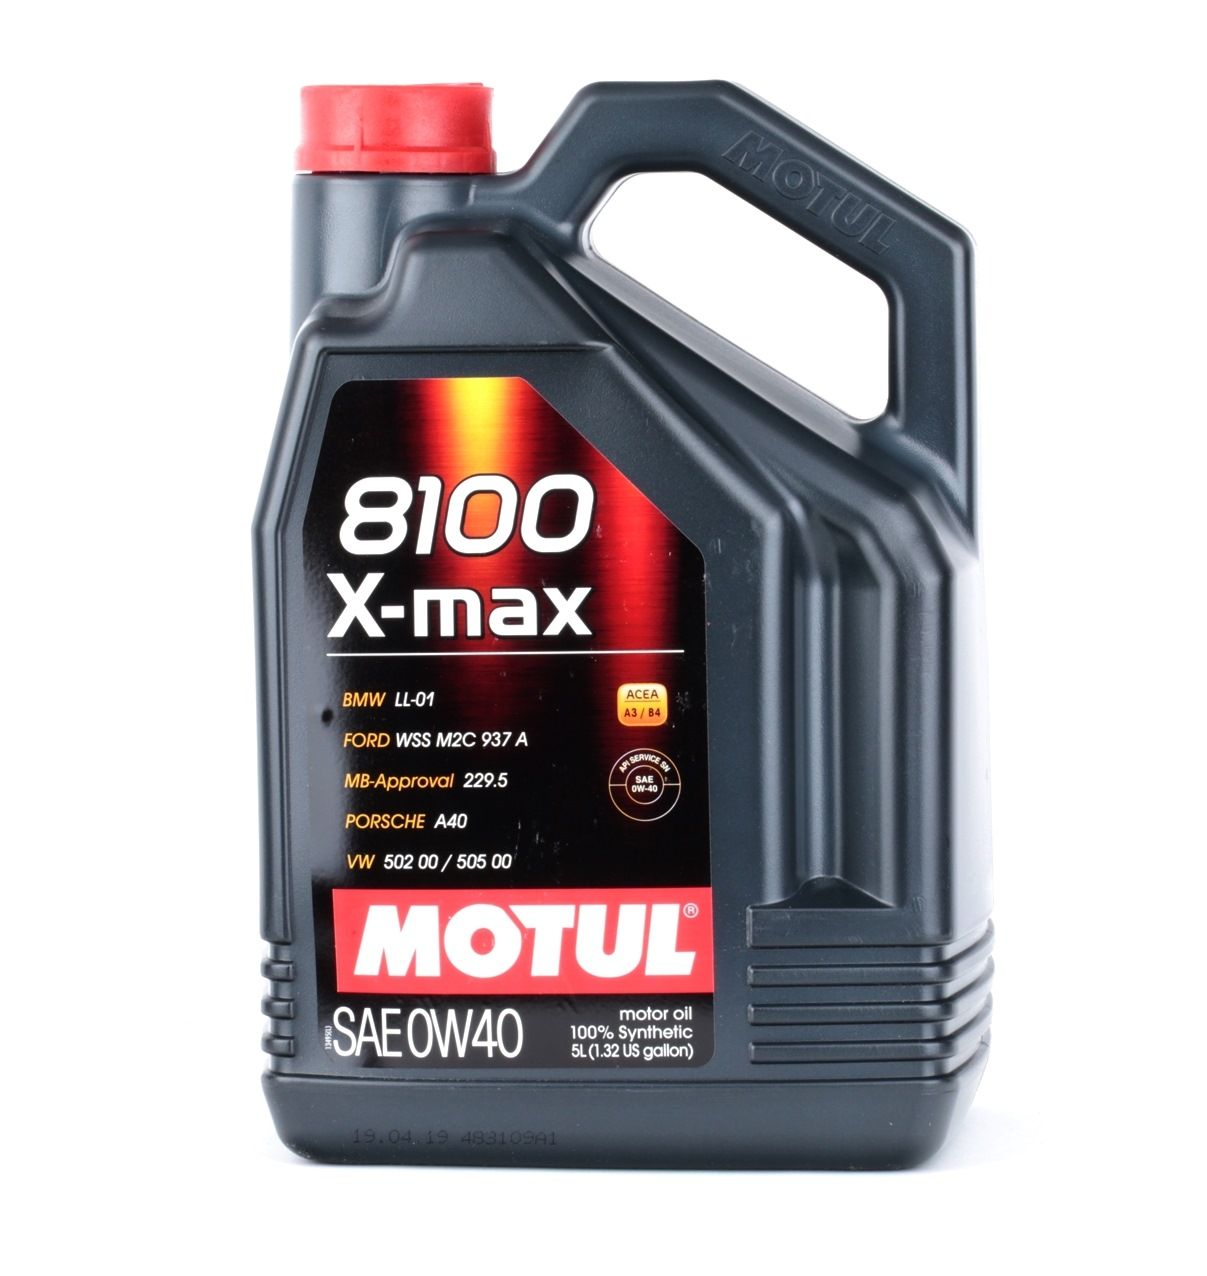 Aceite para motor BMW ll 01 MOTUL - 104533 8100, X-MAX